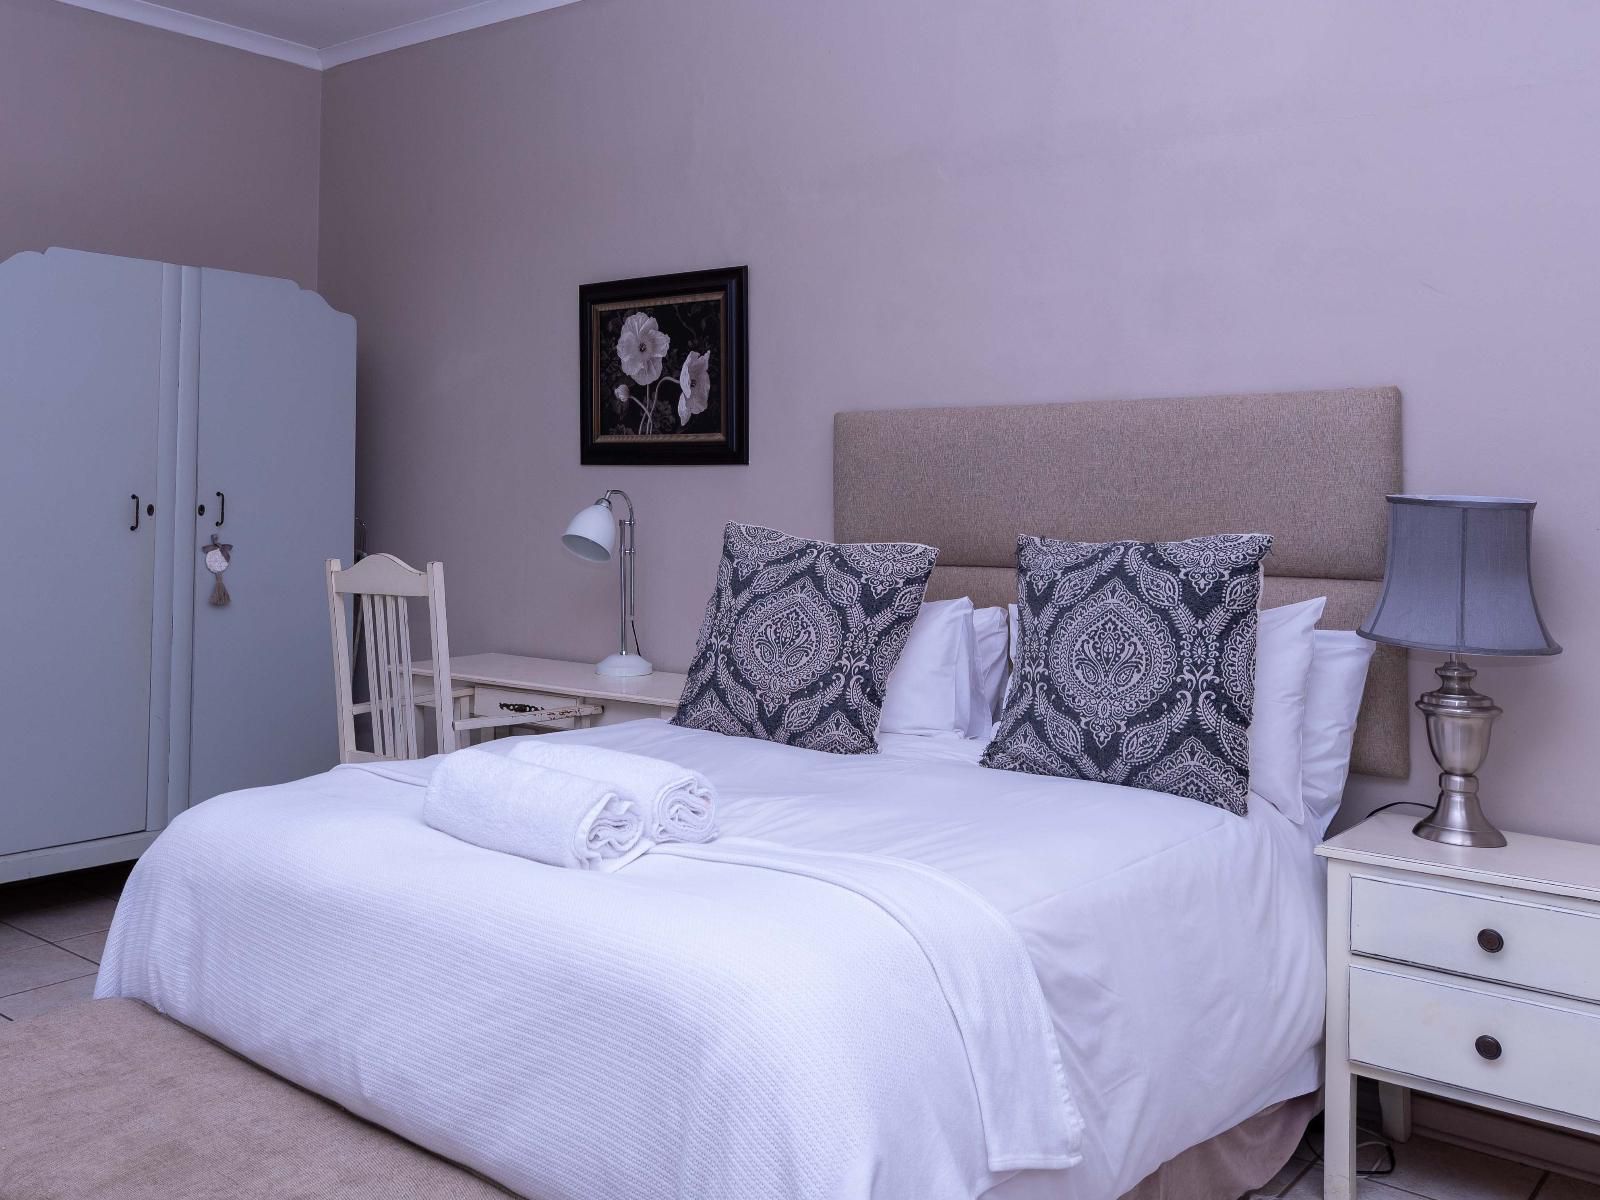 Huttenheights Guestlodge By Ilawu Hutten Heights Newcastle Kwazulu Natal South Africa Bedroom